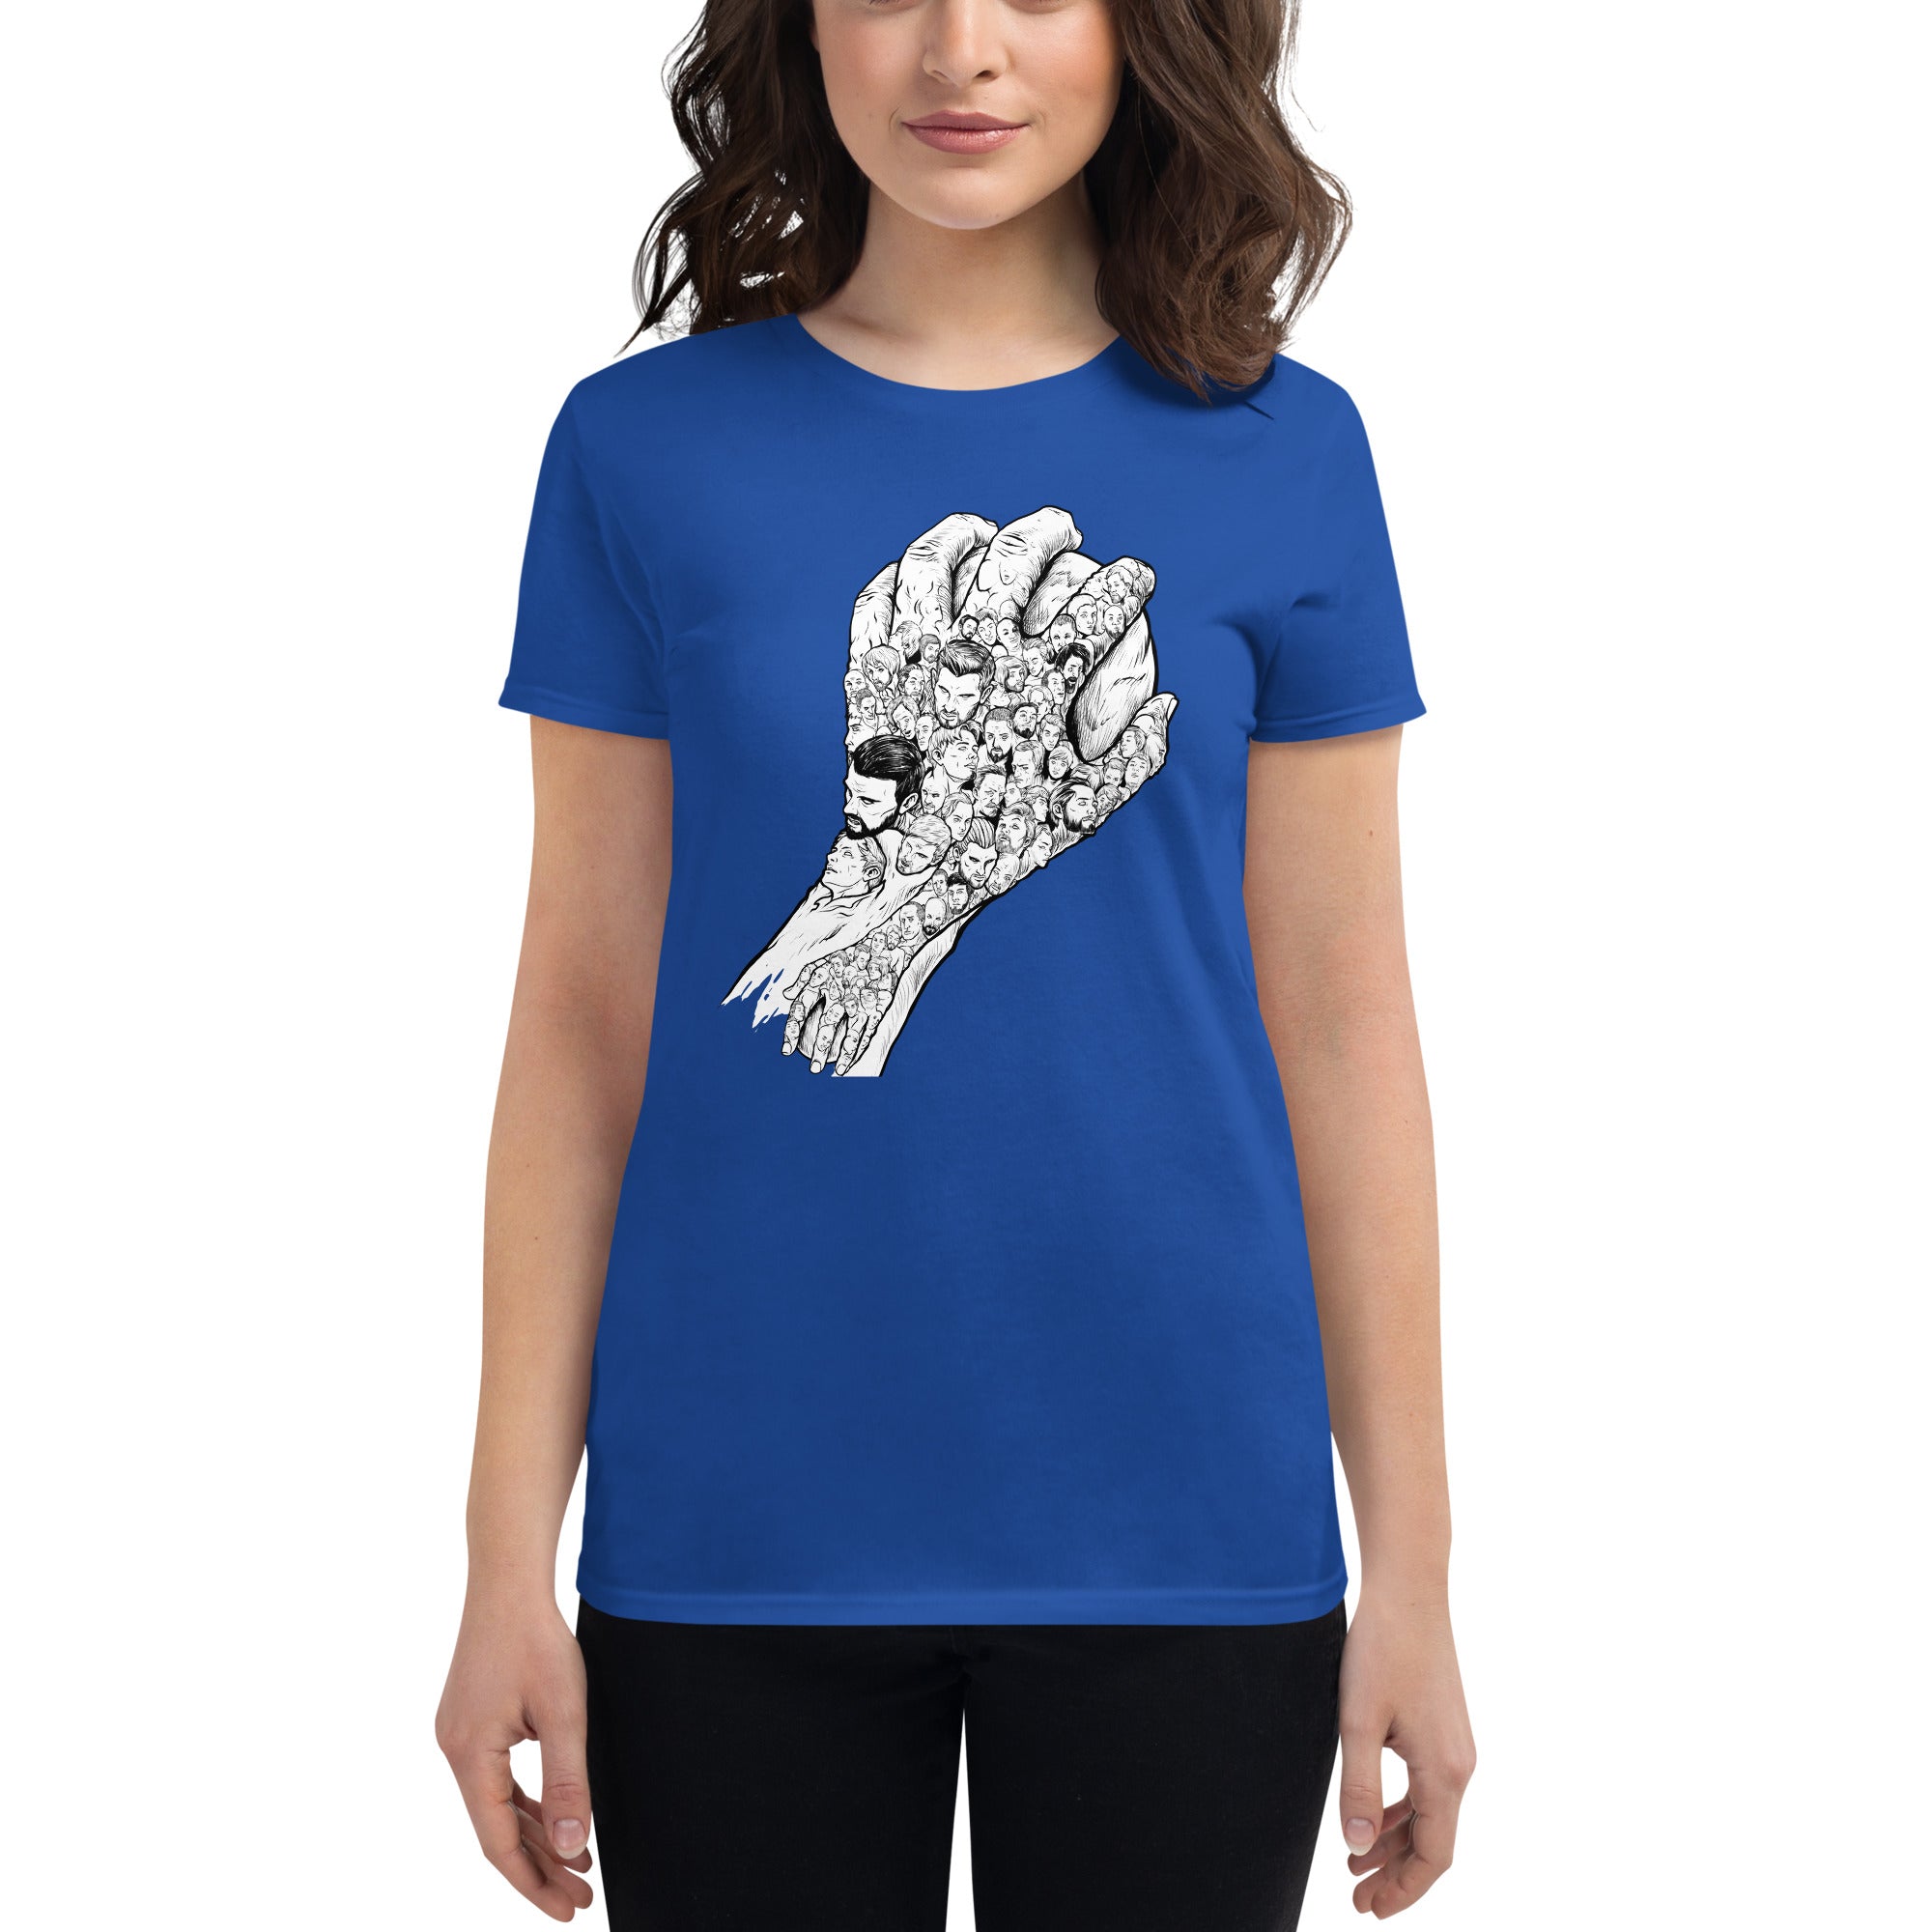 Hand and Face Women's short sleeve t-shirt